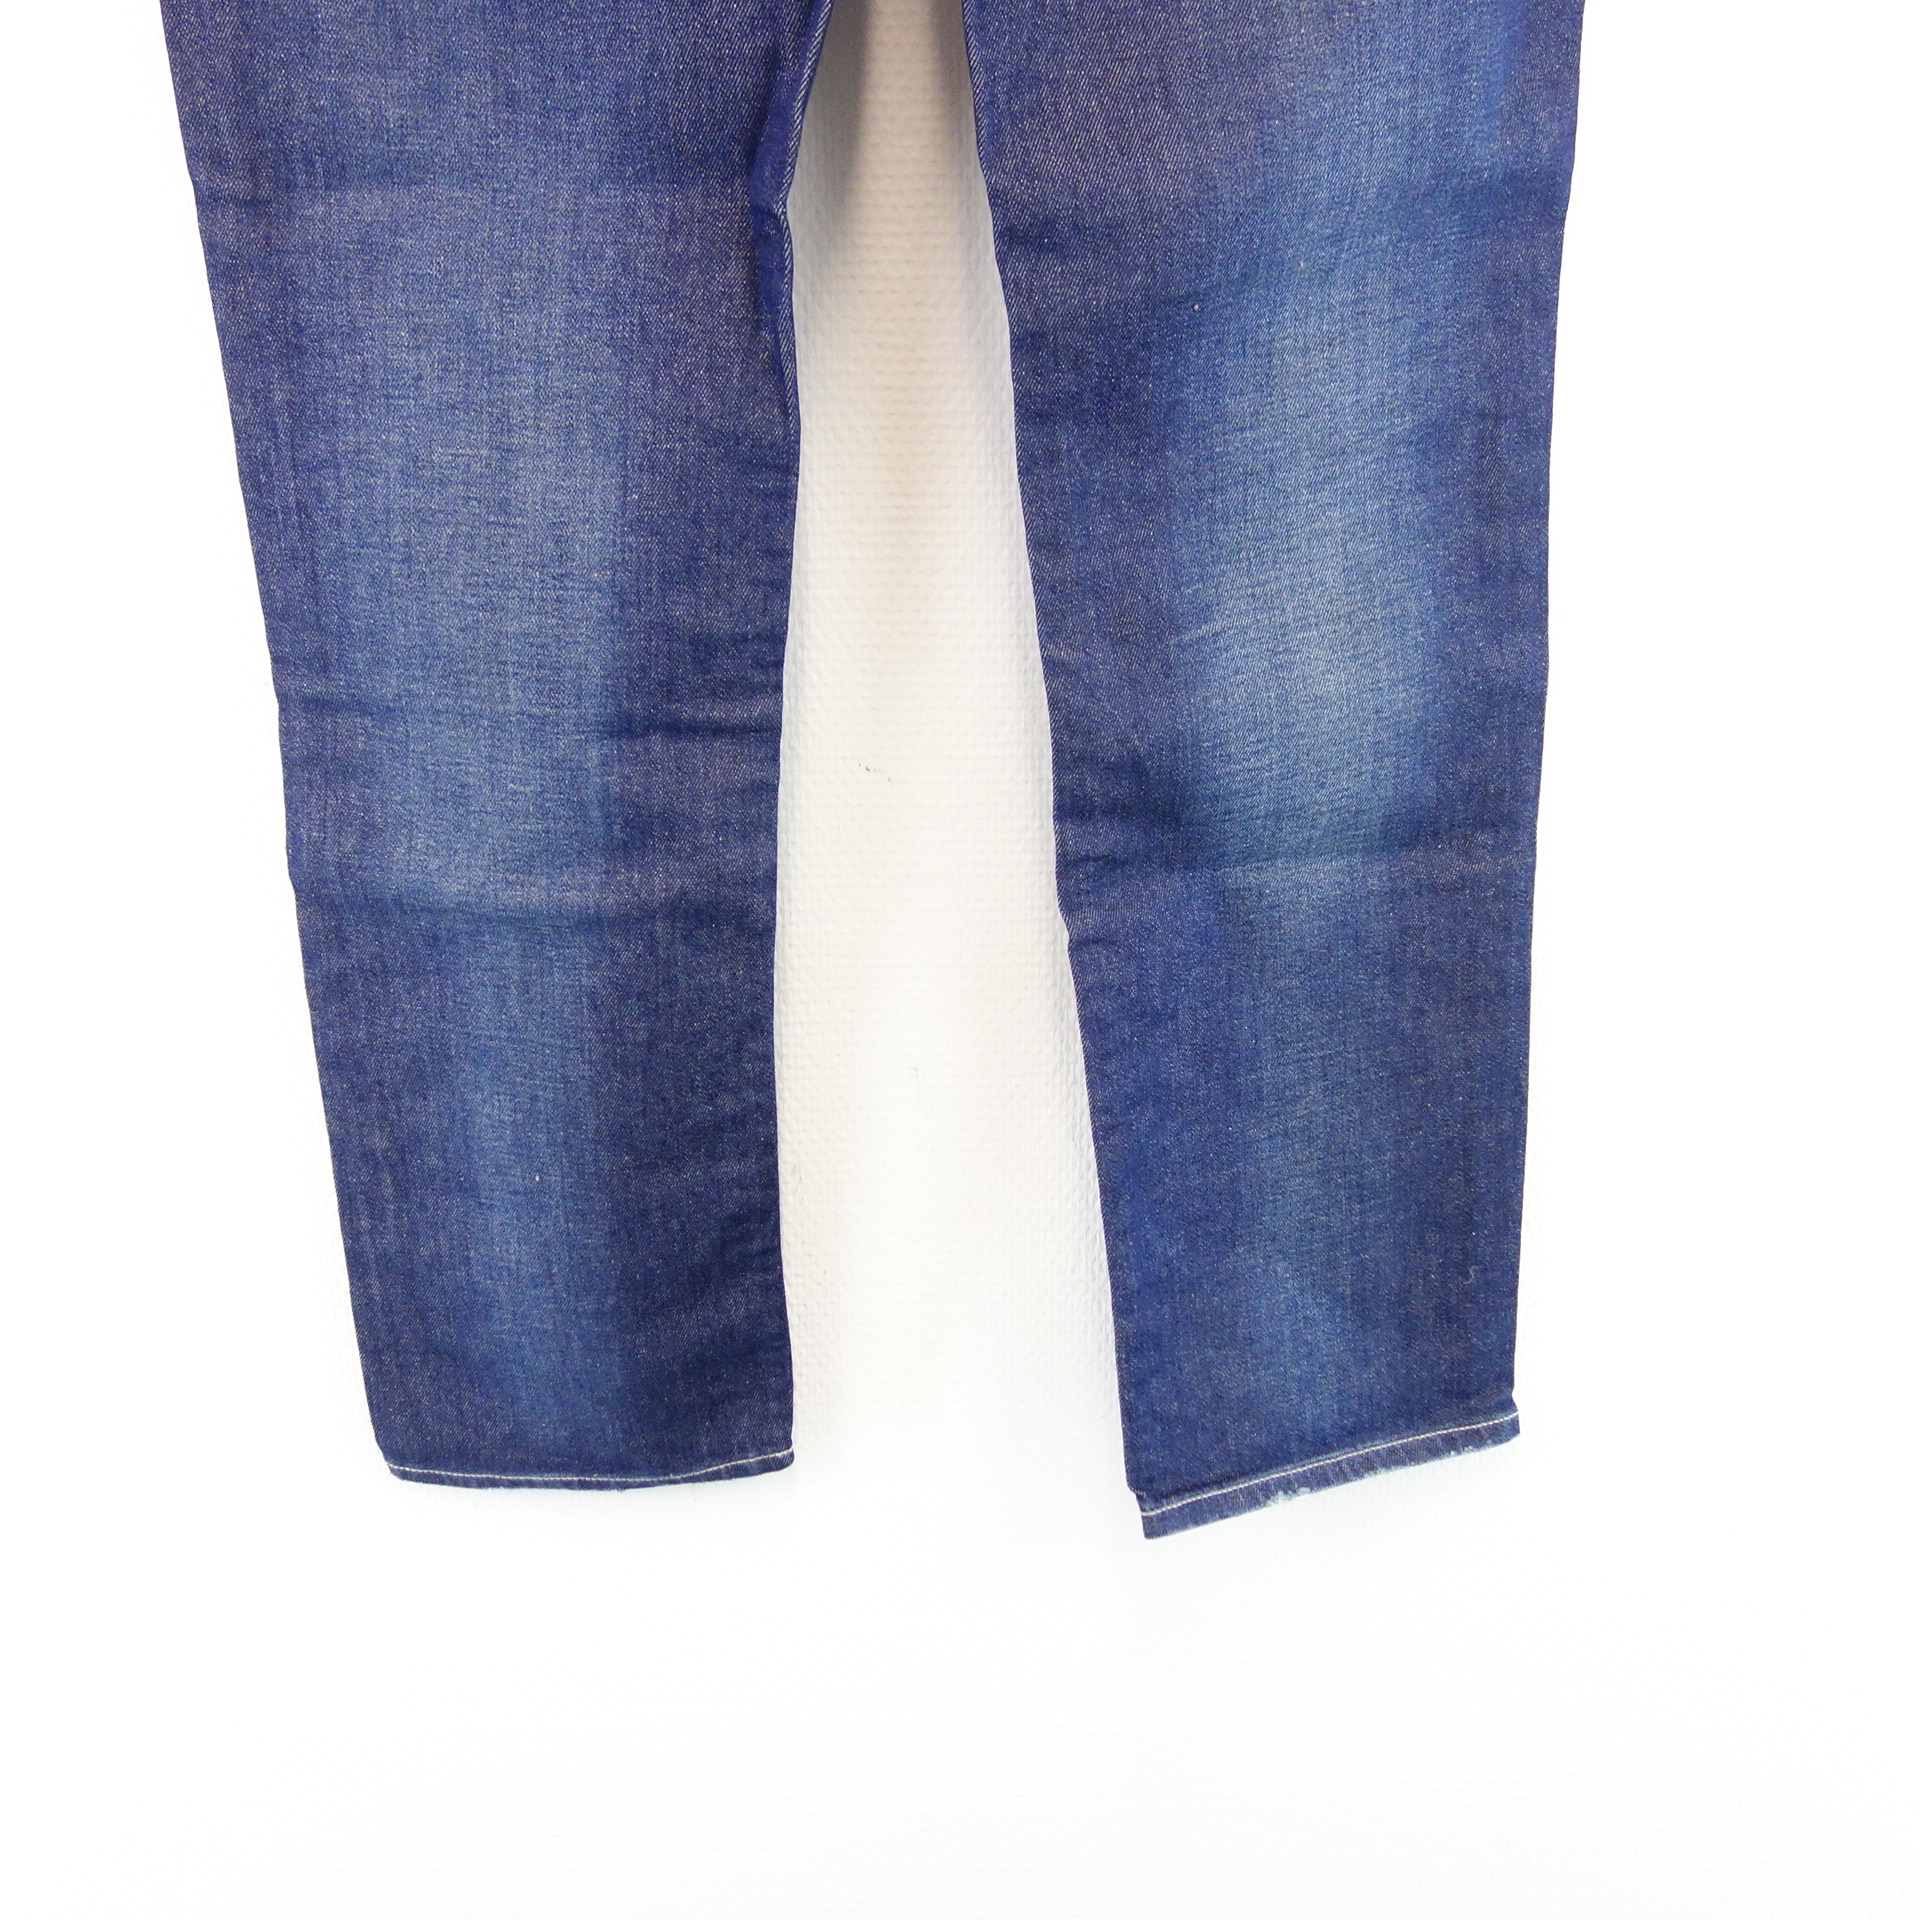 HUGO BOSS Herren Jeans Hose Jeanshose Blau ORANGE 63 London Slim Fit 38 L34